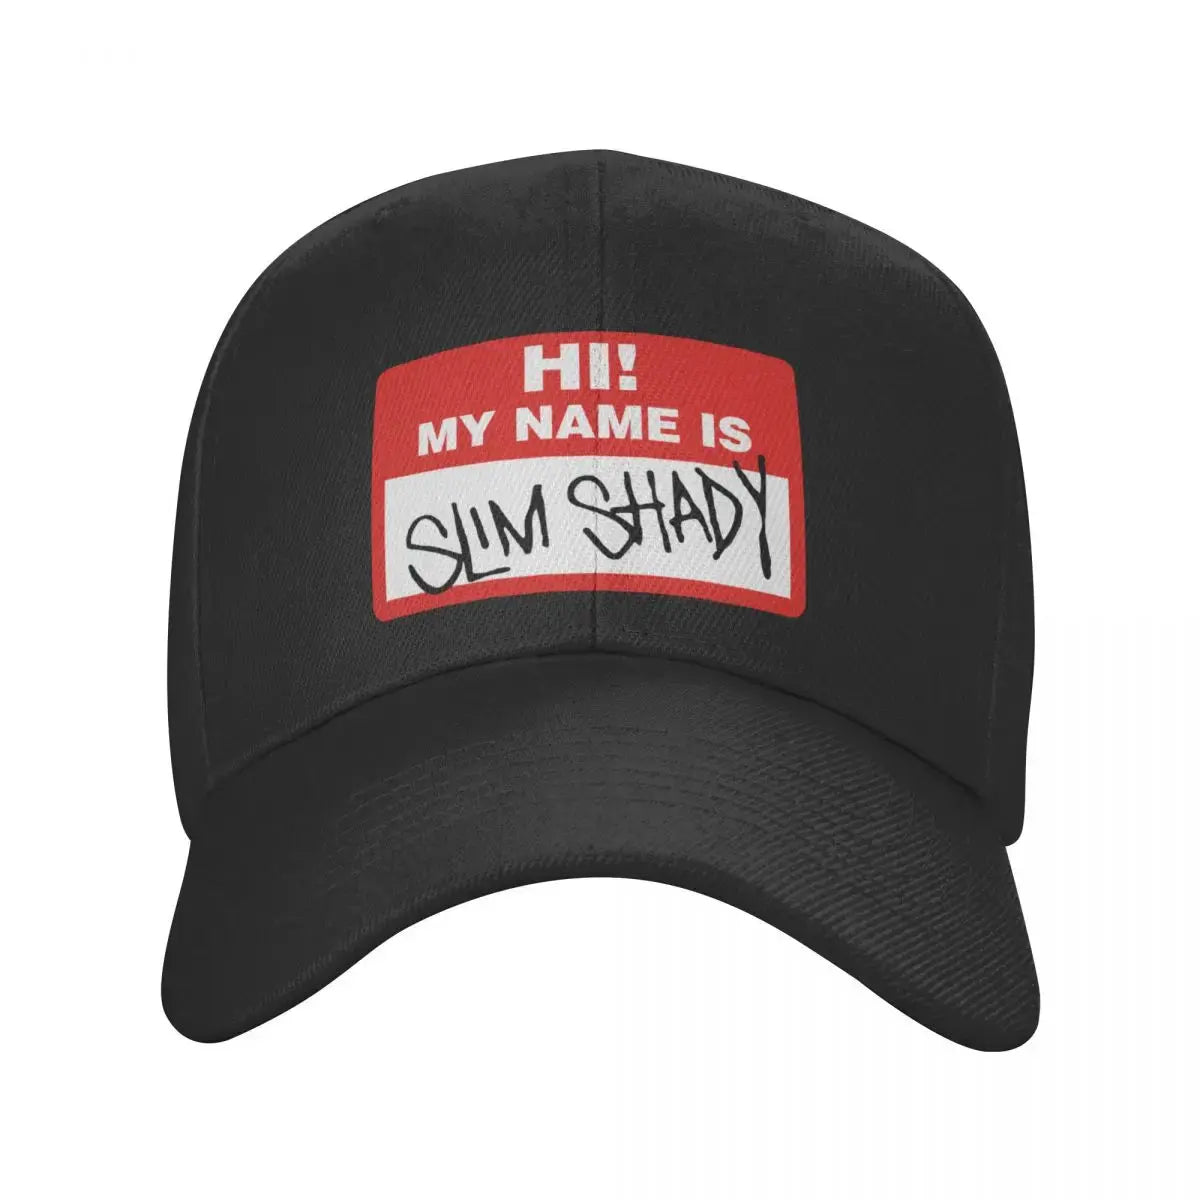 Slim Shady Signature Baseball Cap - 'Hi, My Name Is' Edition